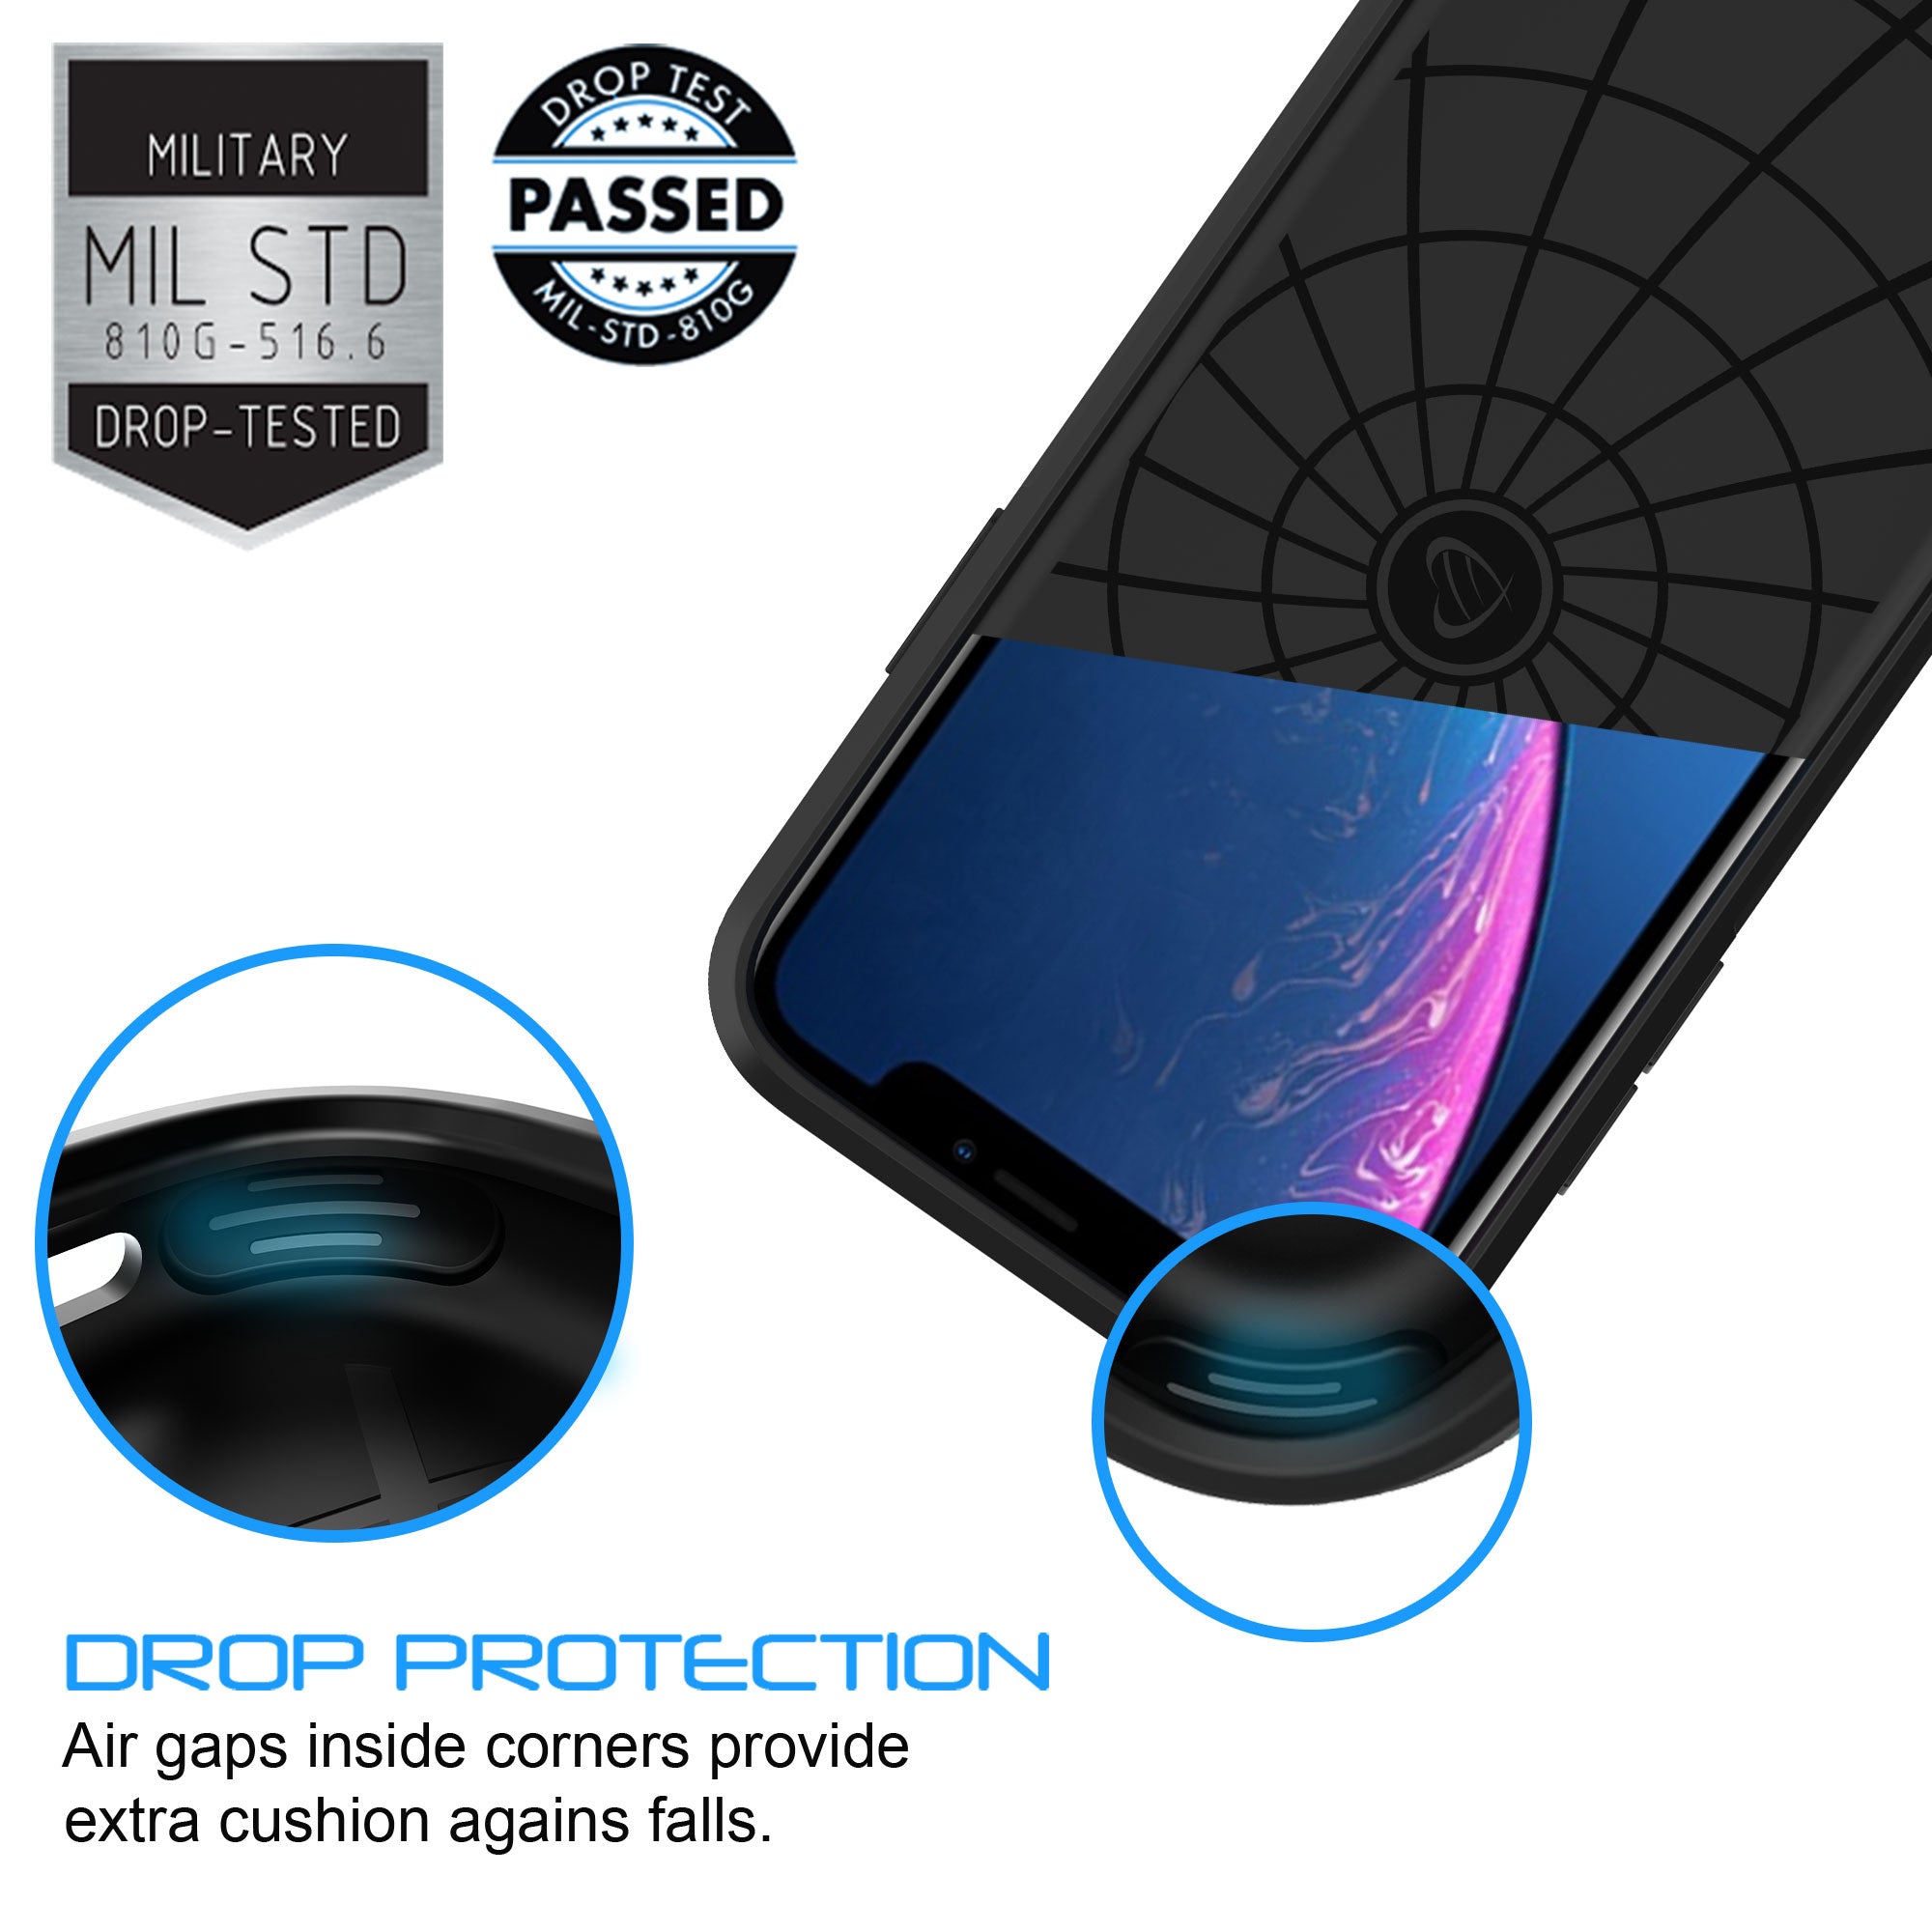 Luvvitt $250 Warranty ULTRA ARMOR Case + Liquid Glass Screen Protector Bundle for iPhone 11 Pro Max 2019 - Black